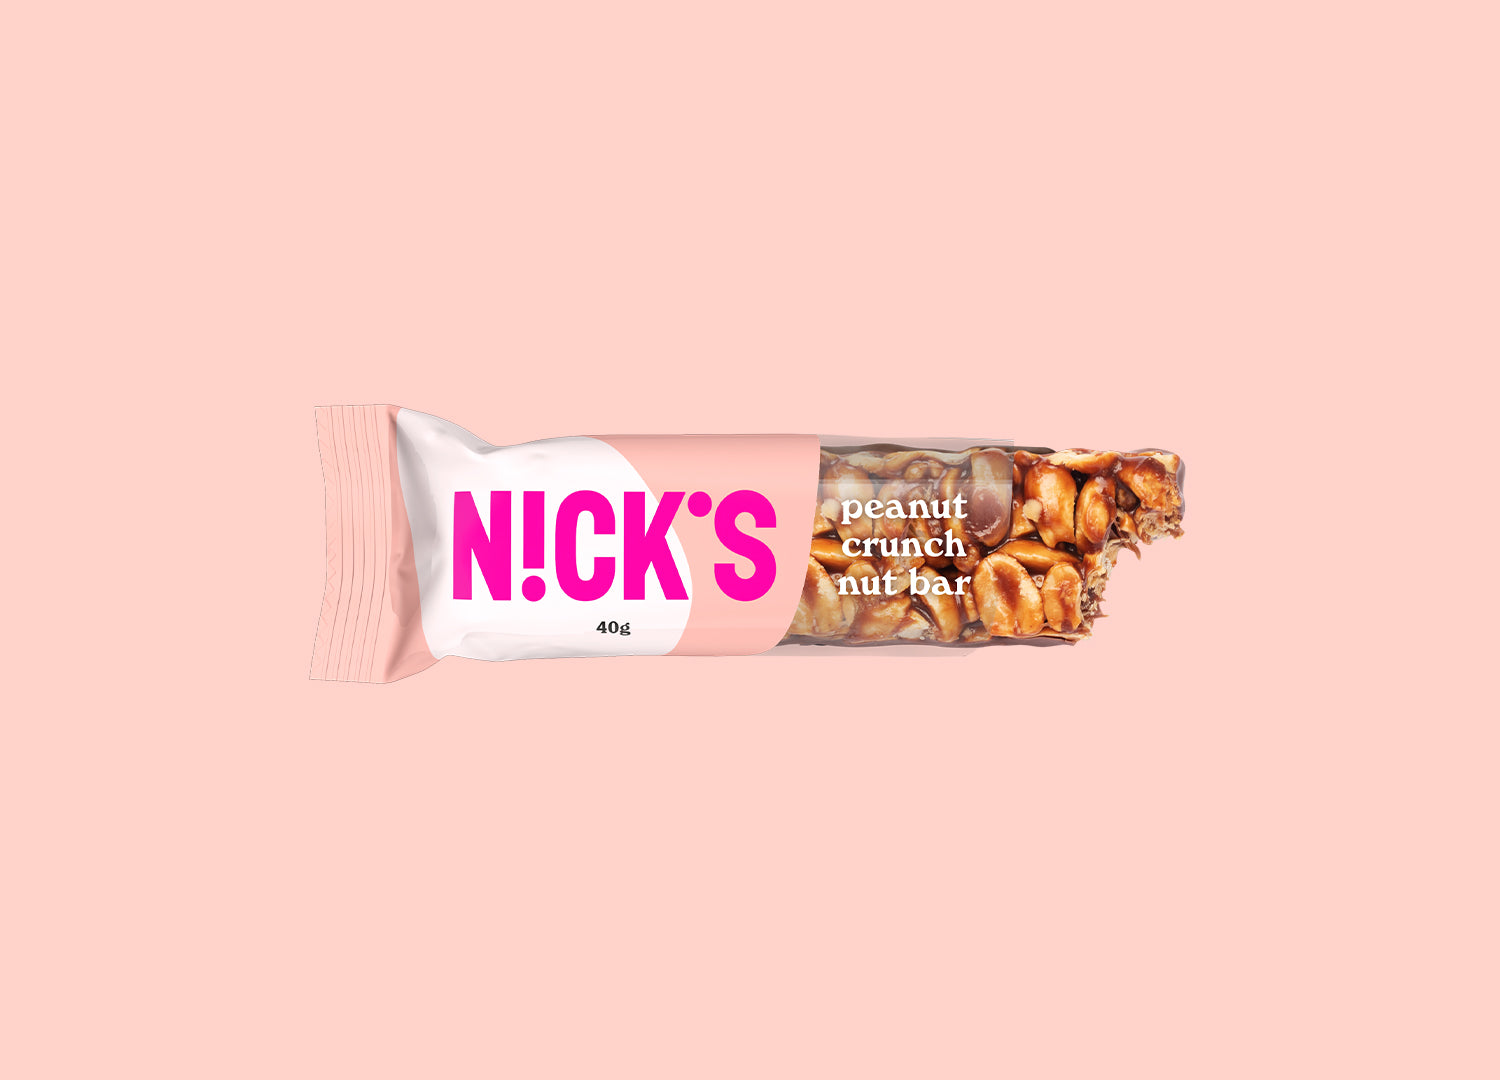 NICK'S vegan products